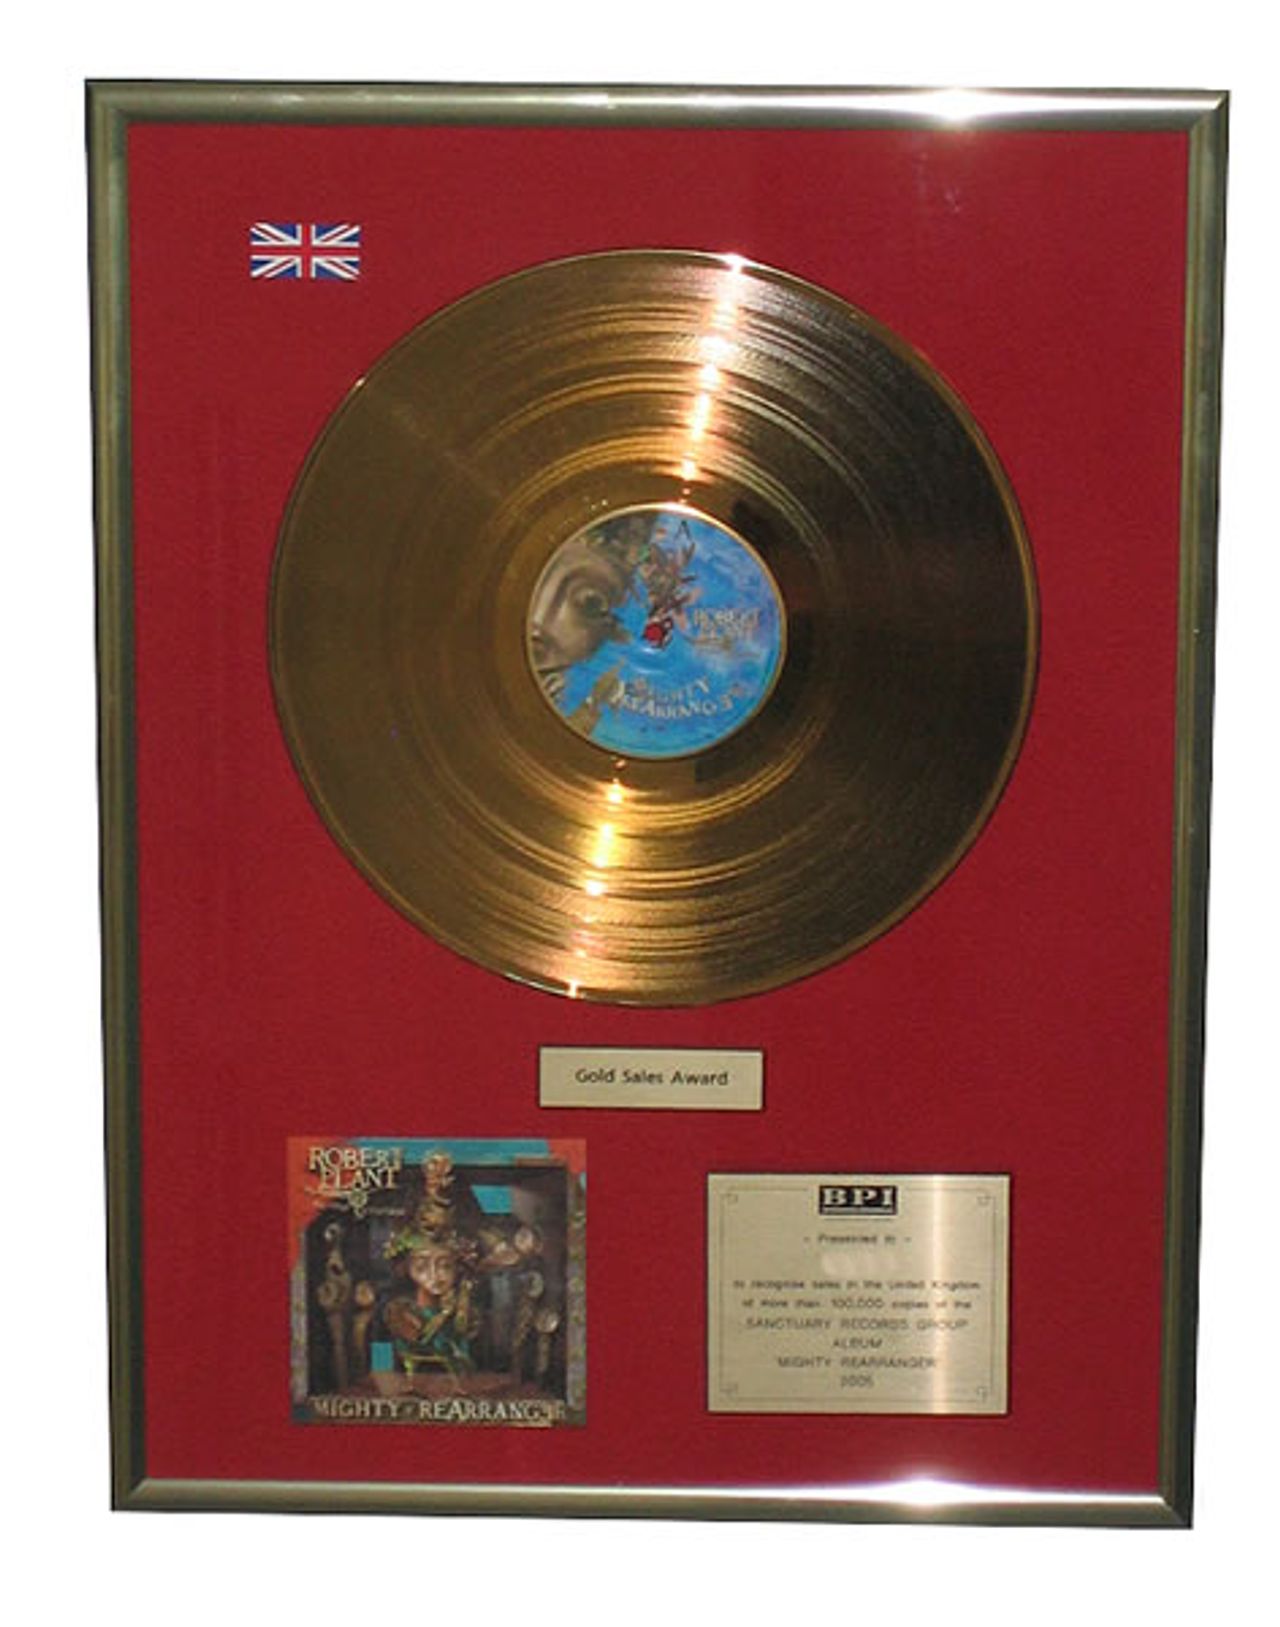 Robert Plant Mighty Rearranger UK award disc GOLD AWARD